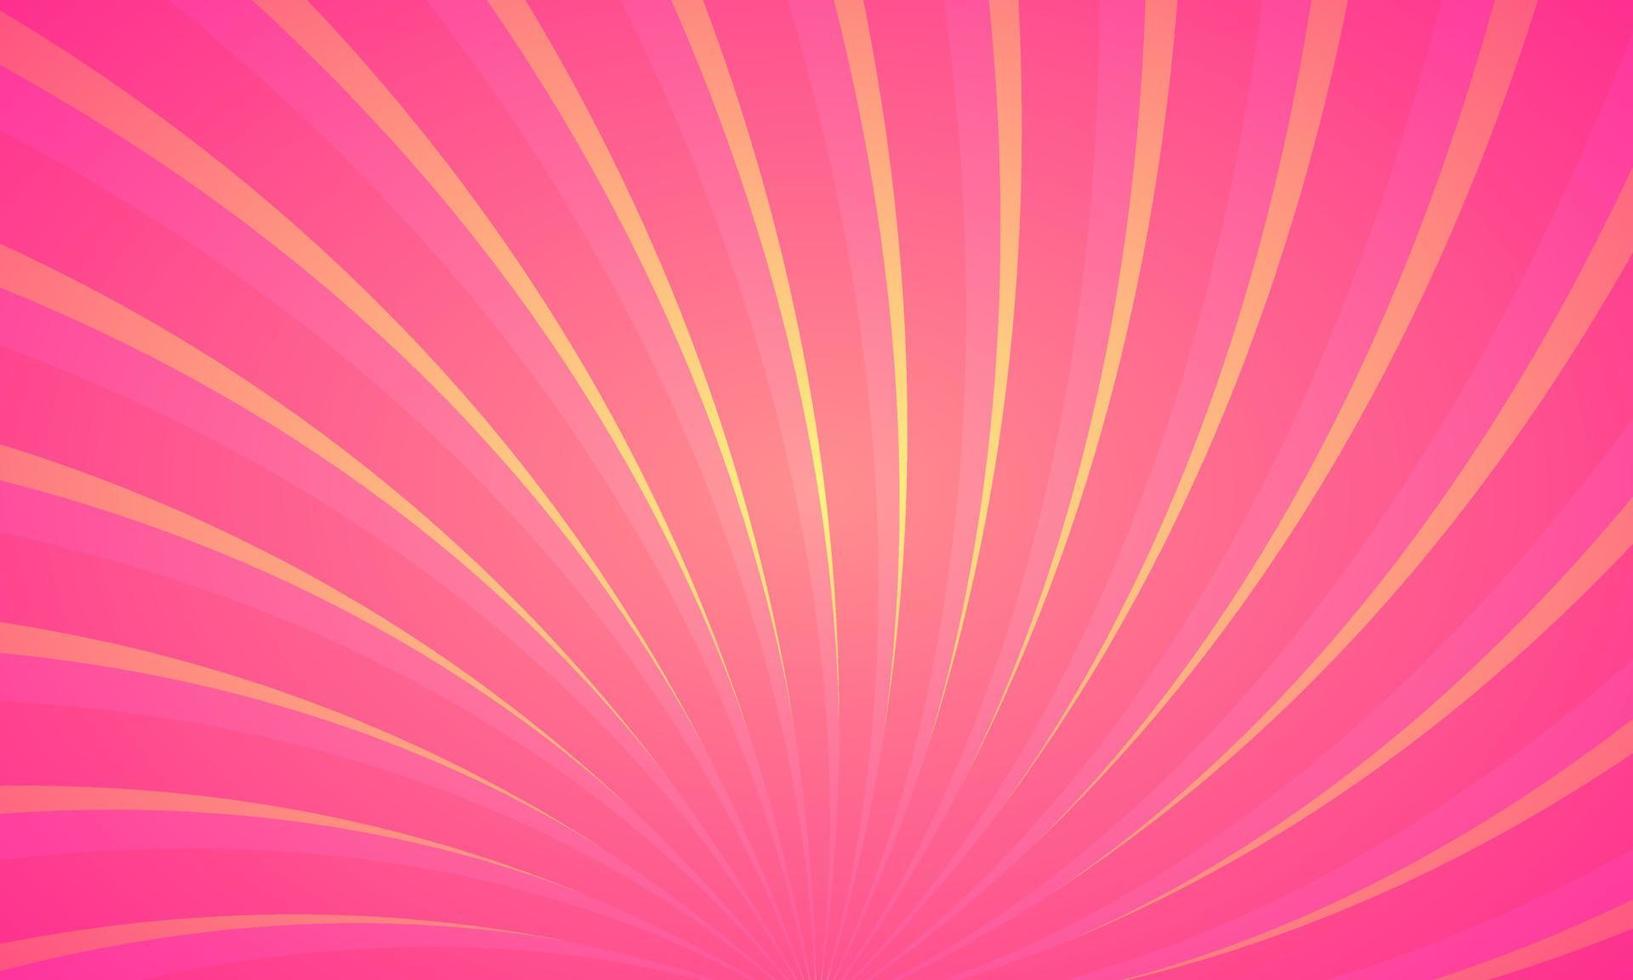 Ray fractal swirl sunburst flare explosion abstract background poster wallpaper  vector illustration